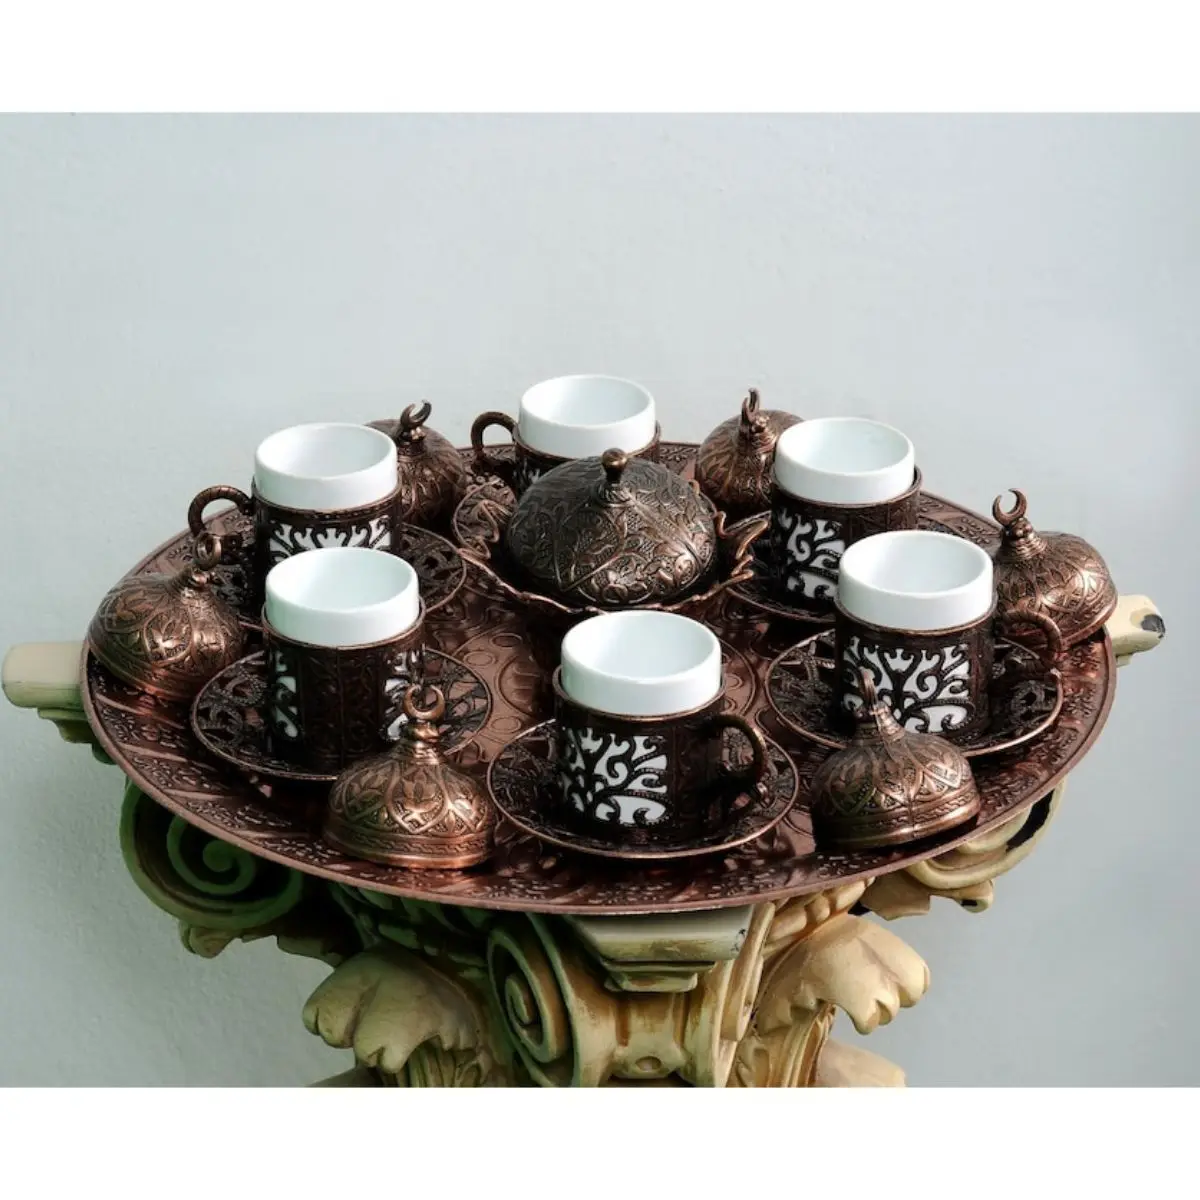 https://ae01.alicdn.com/kf/A1aca59e43fd84882b91a8ae3b659e60bR/Authentic-Coffee-Cup-Set-for-6-person-Stylish-Espresso-Ottoman-Turkish-Coffee-Silver-Gold-Copper-Colored.jpg